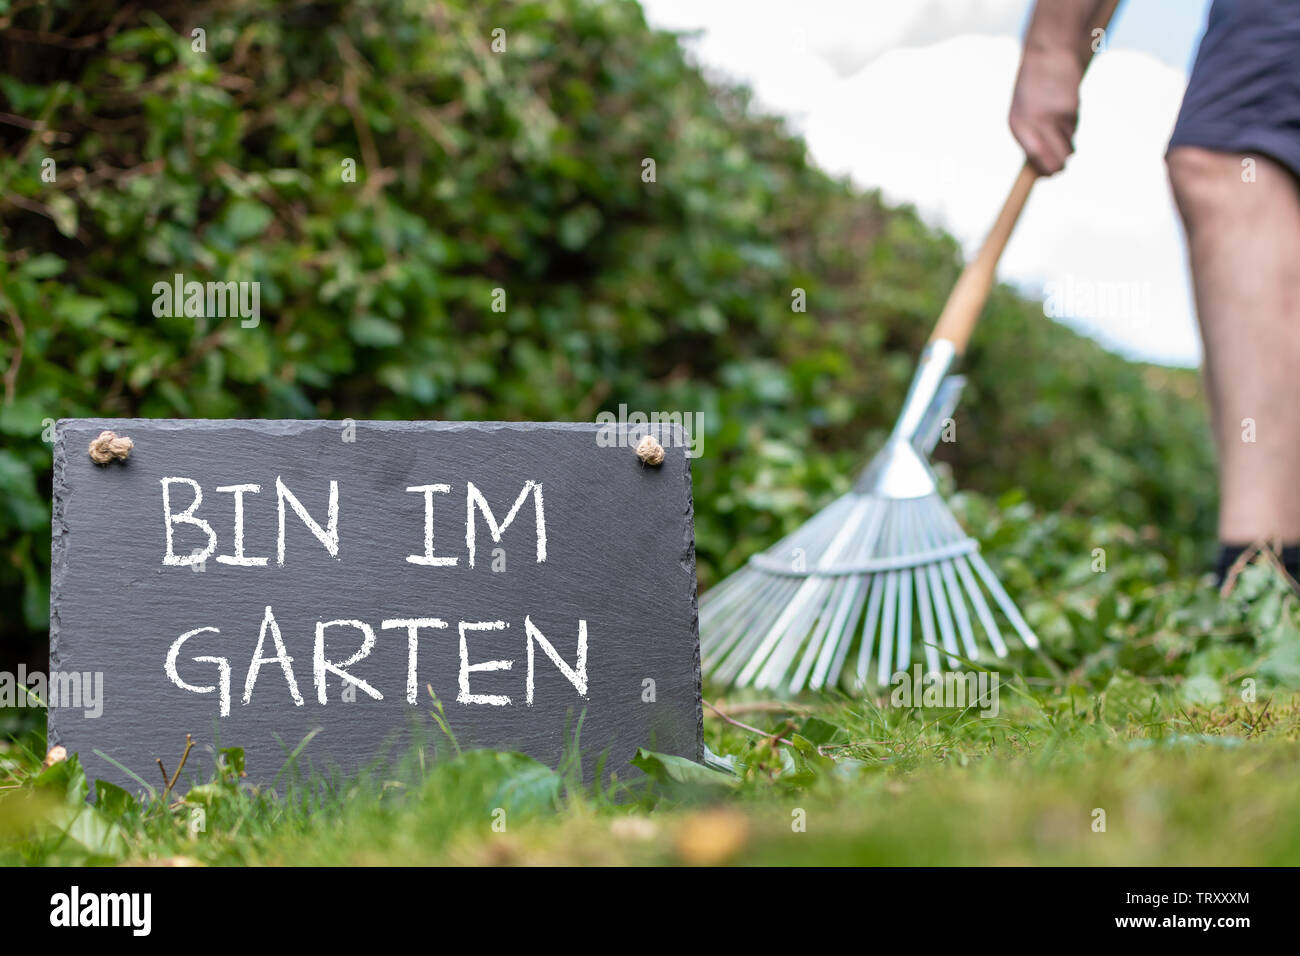 Work in the garden. Man is raking leaves of a freshly cut hornbeam hedge. The German sentence 'Bin im Garten' ('I'm in the garden' in English) is writ Stock Photo